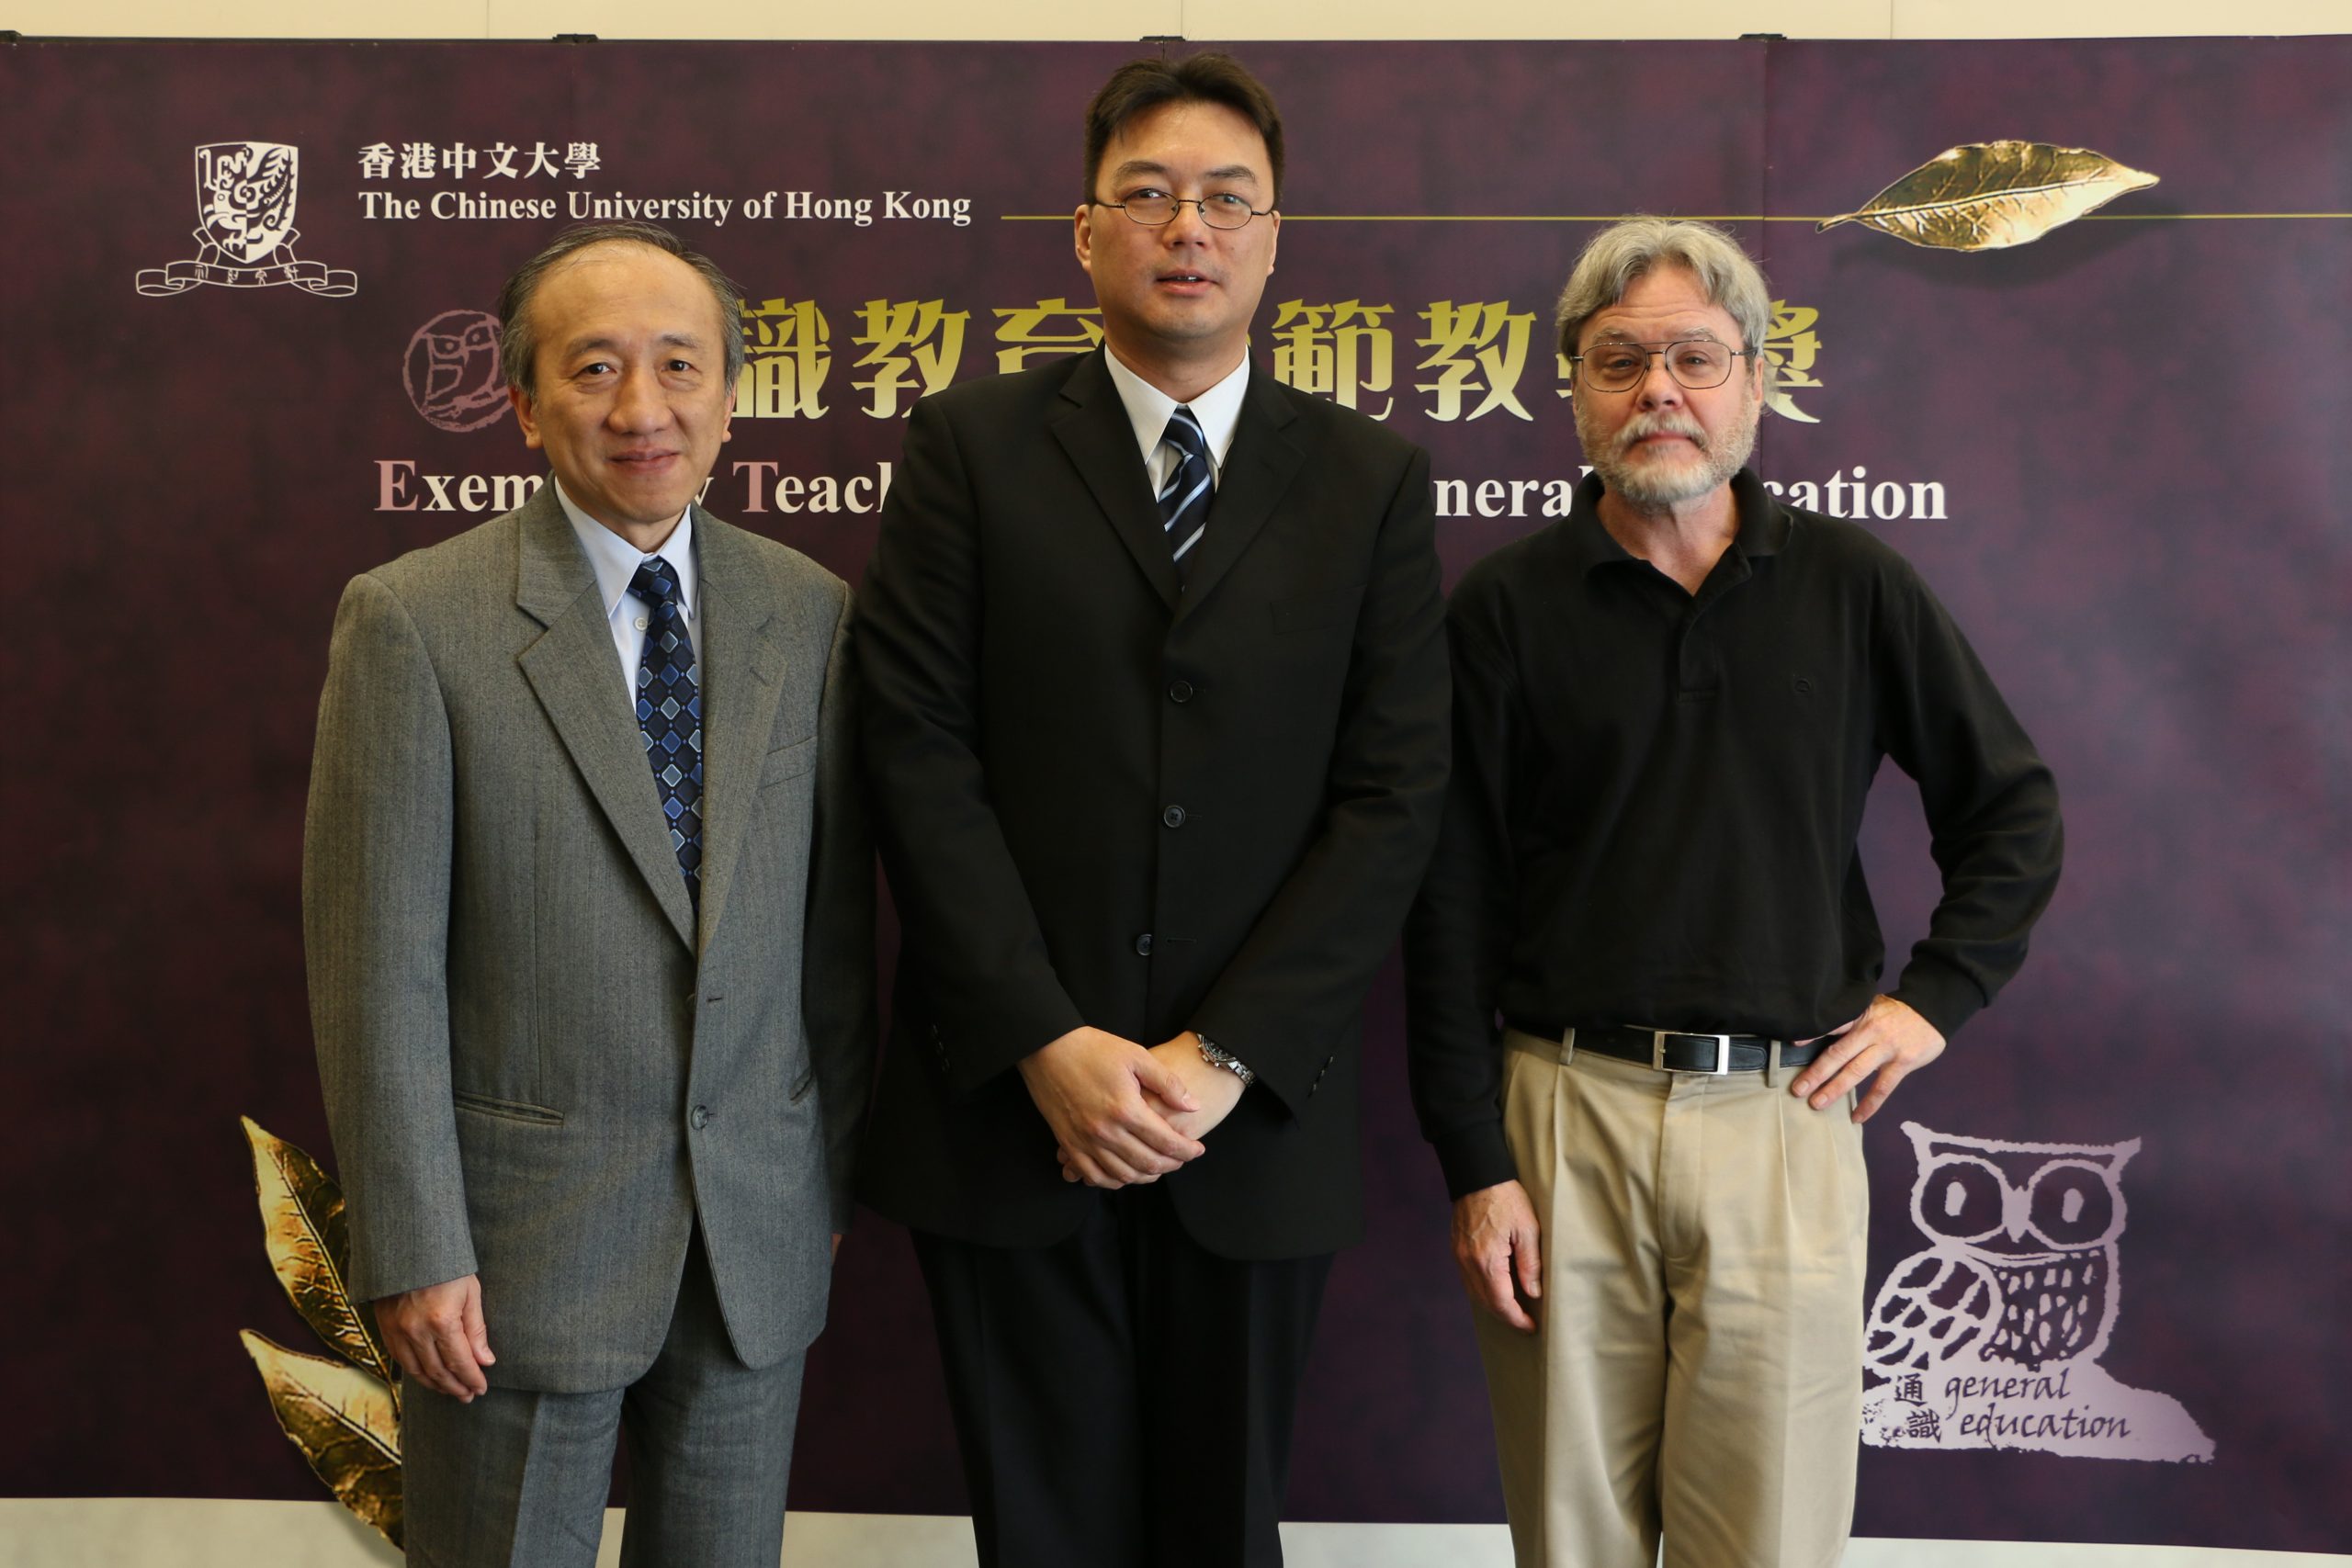 Professor Hau and two awardees